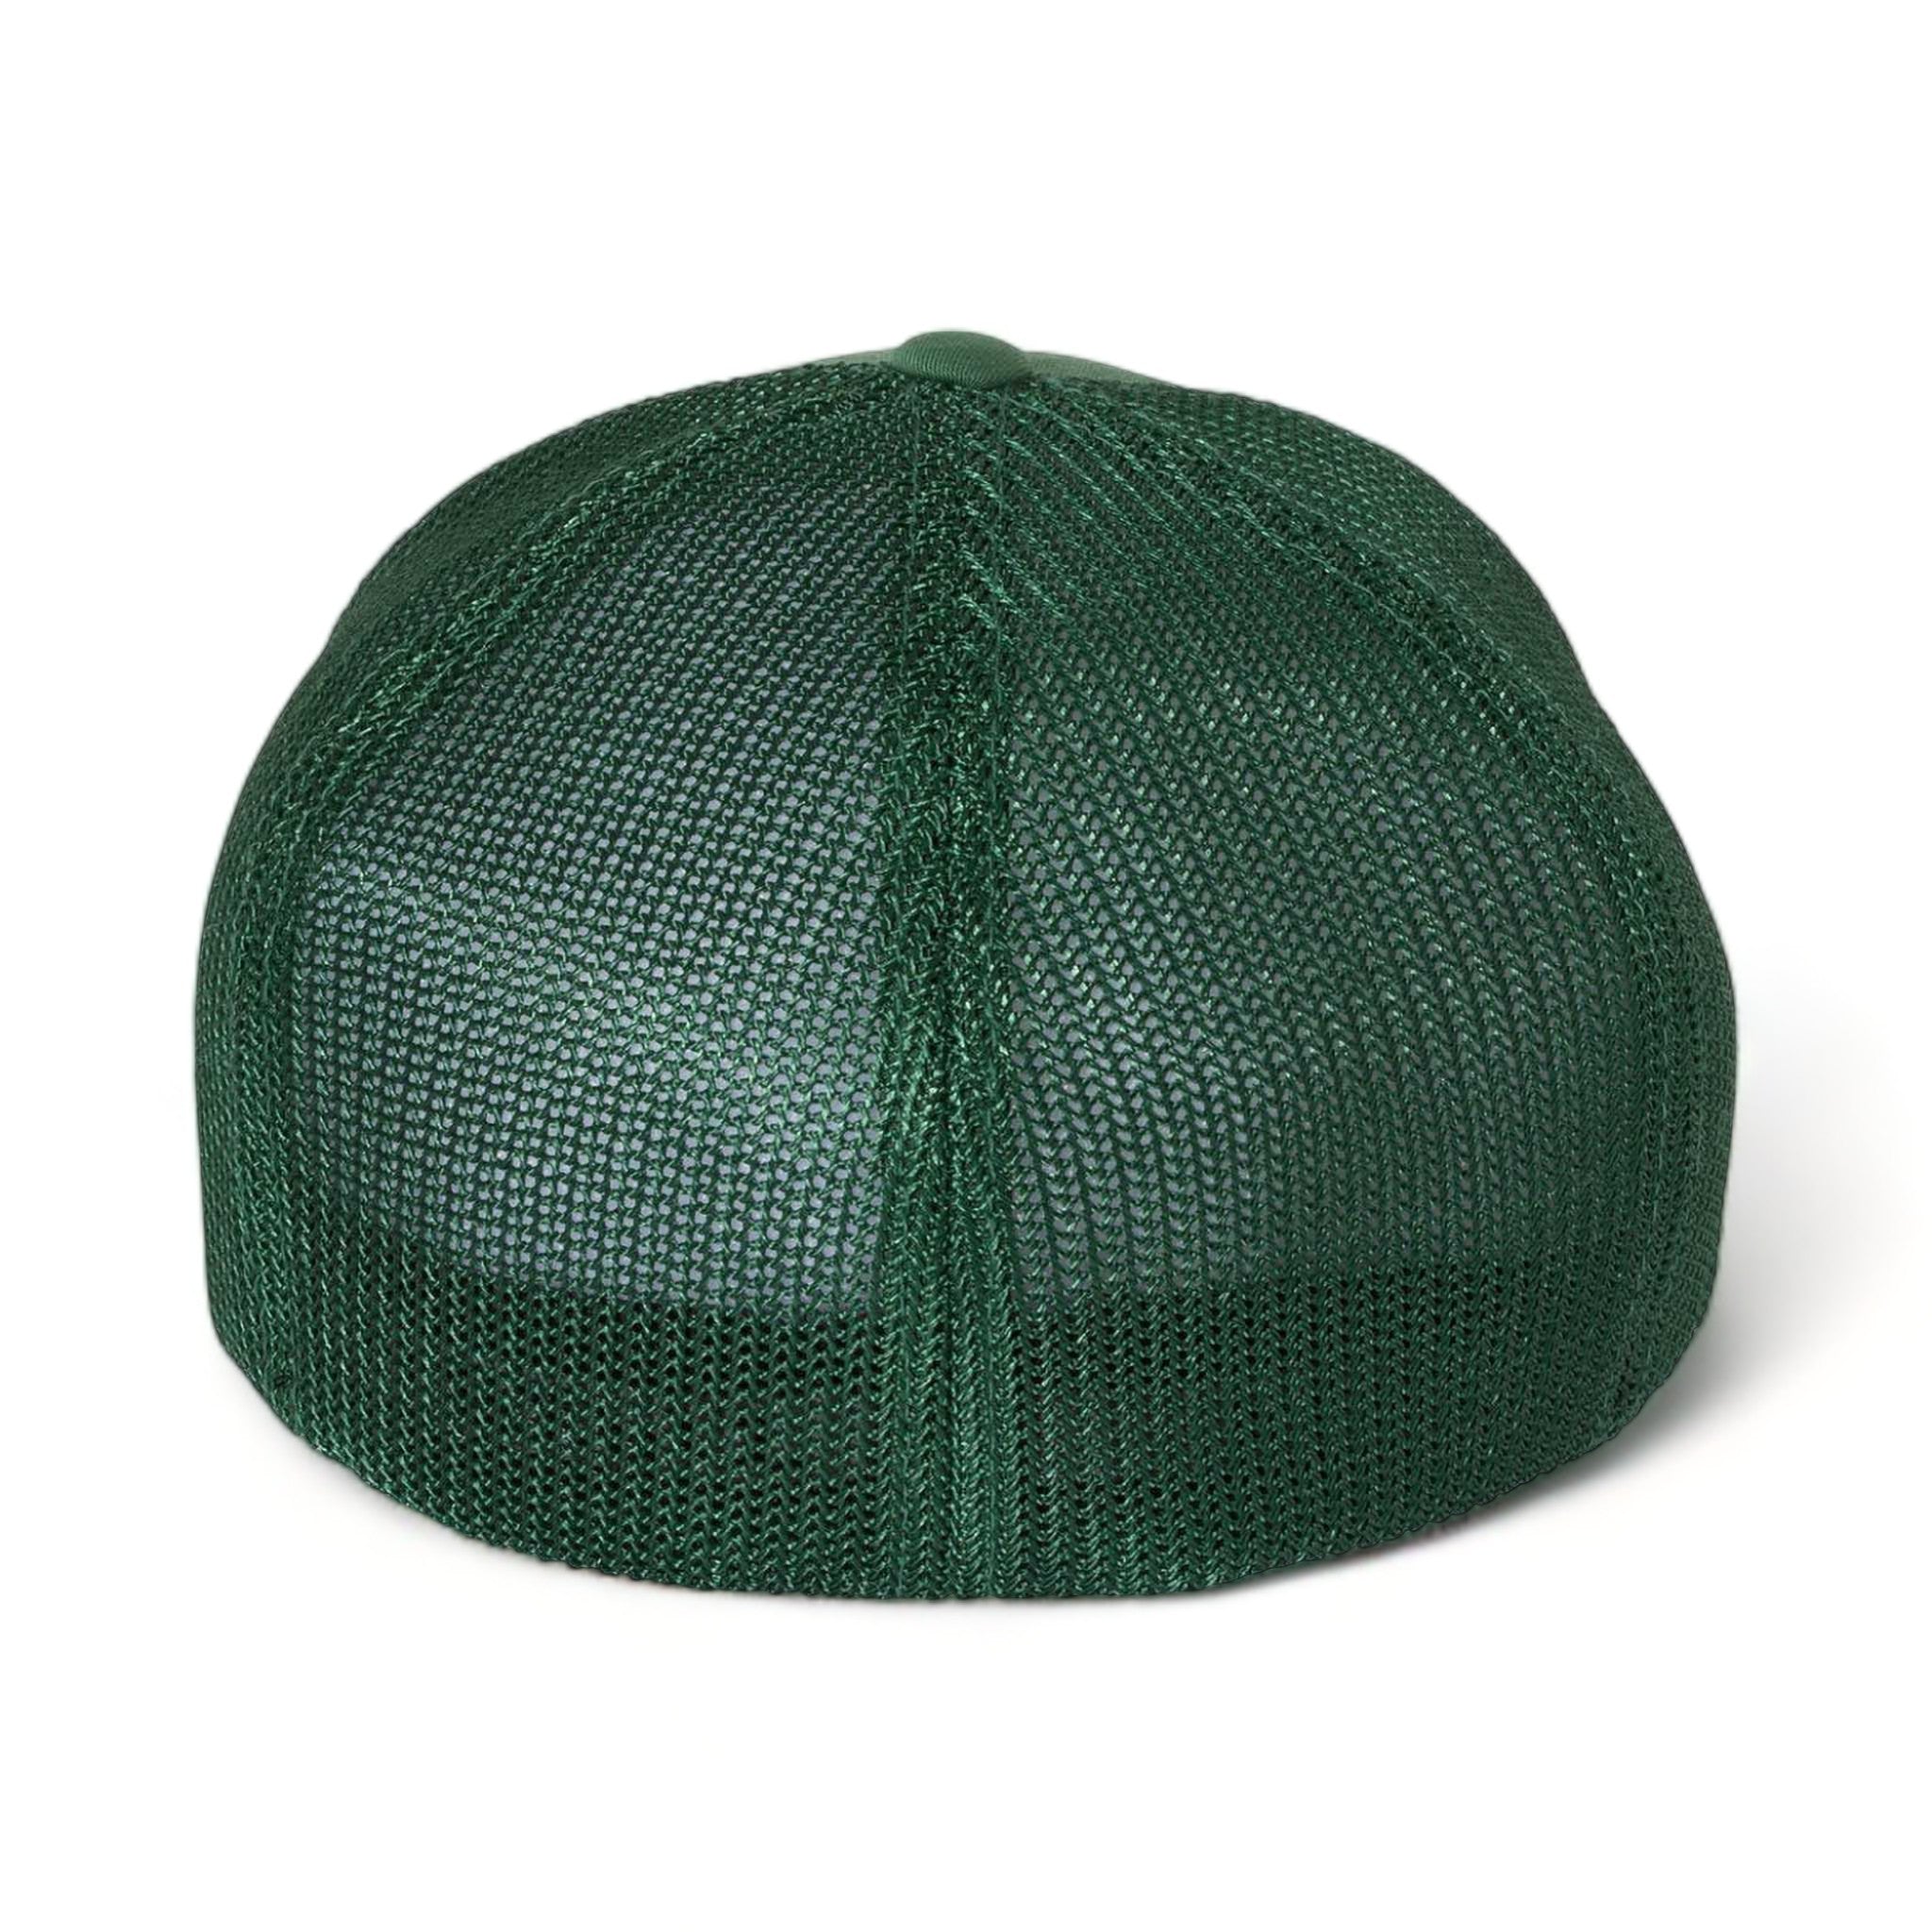 Back view of Flexfit 6511 custom hat in evergreen